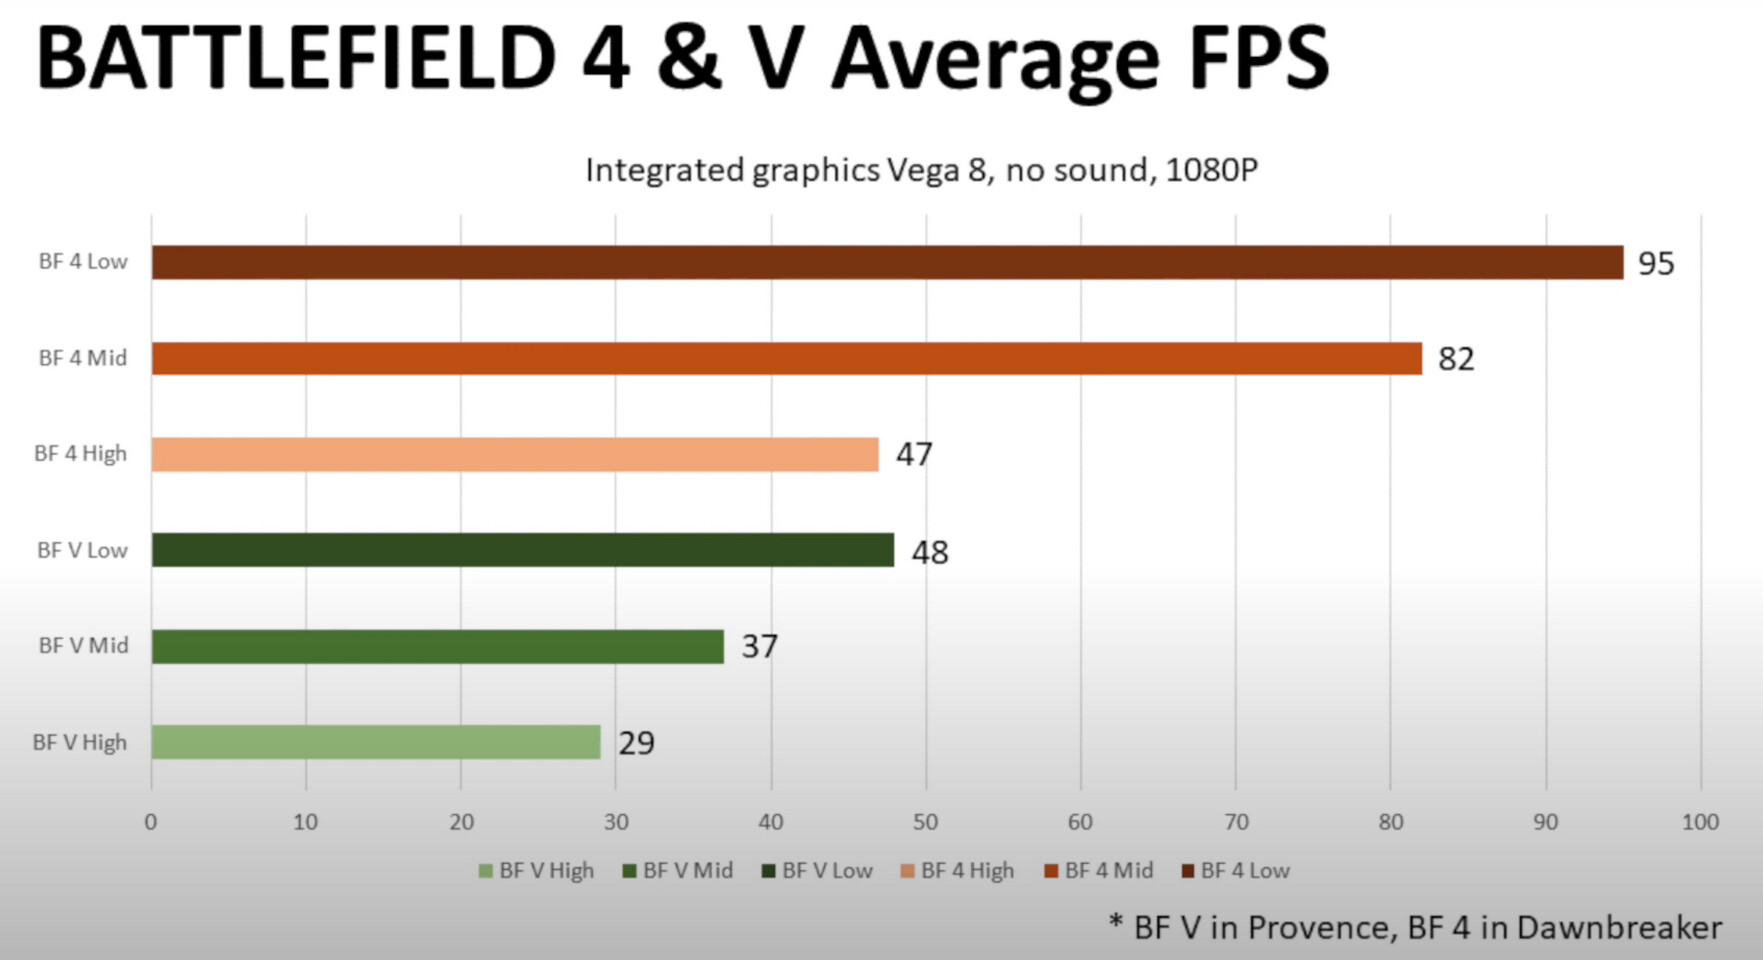 Battlefield 4 Premium Edition Gameplay AMD R9 270X Max Settings dx 11.2  Ultra 4x Antialiasing 